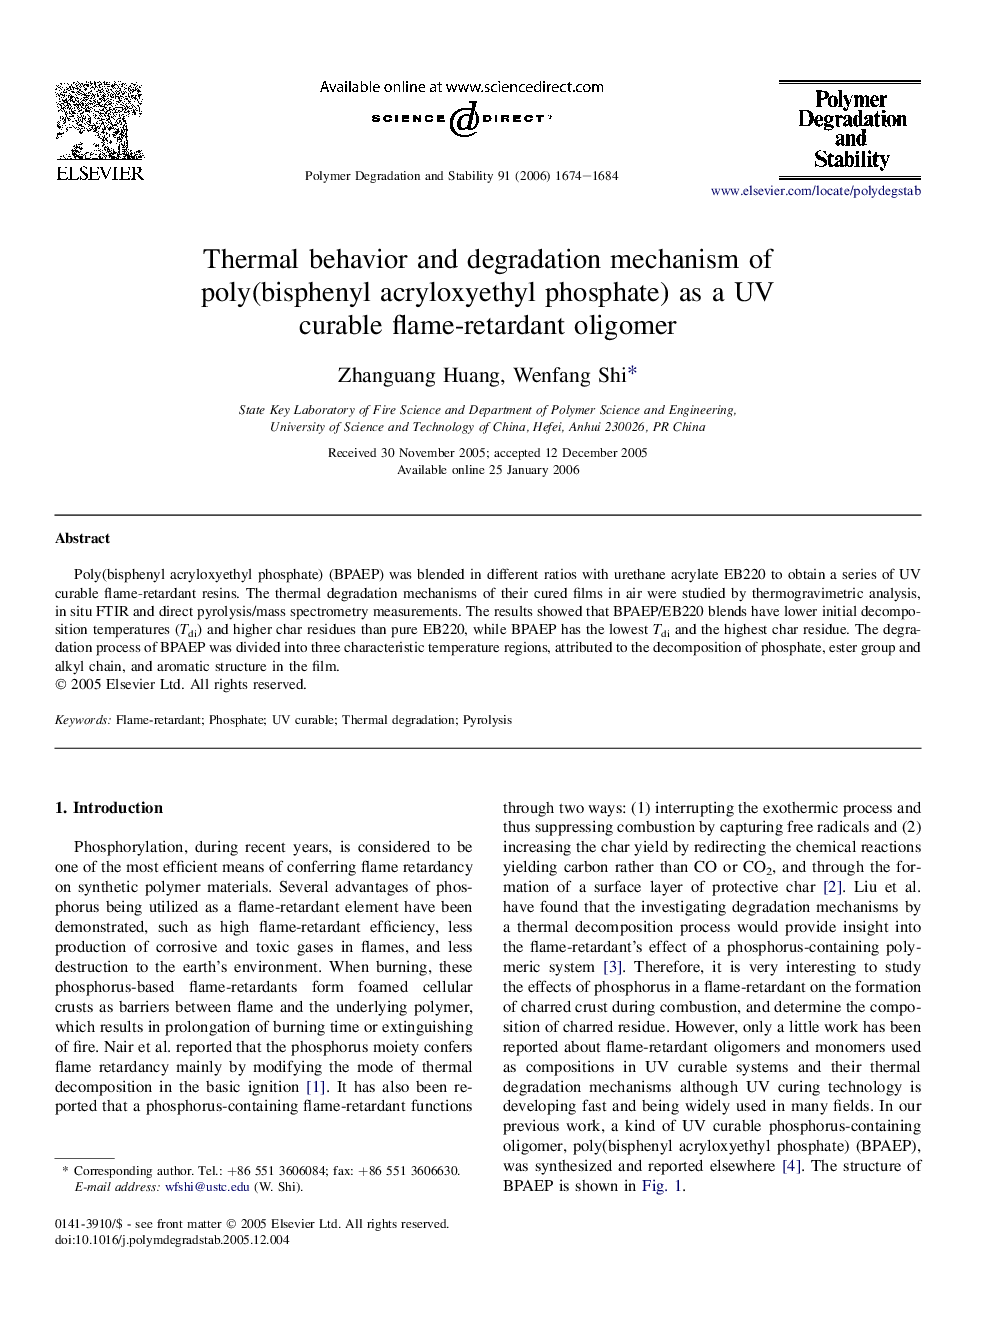 Thermal behavior and degradation mechanism of poly(bisphenyl acryloxyethyl phosphate) as a UV curable flame-retardant oligomer